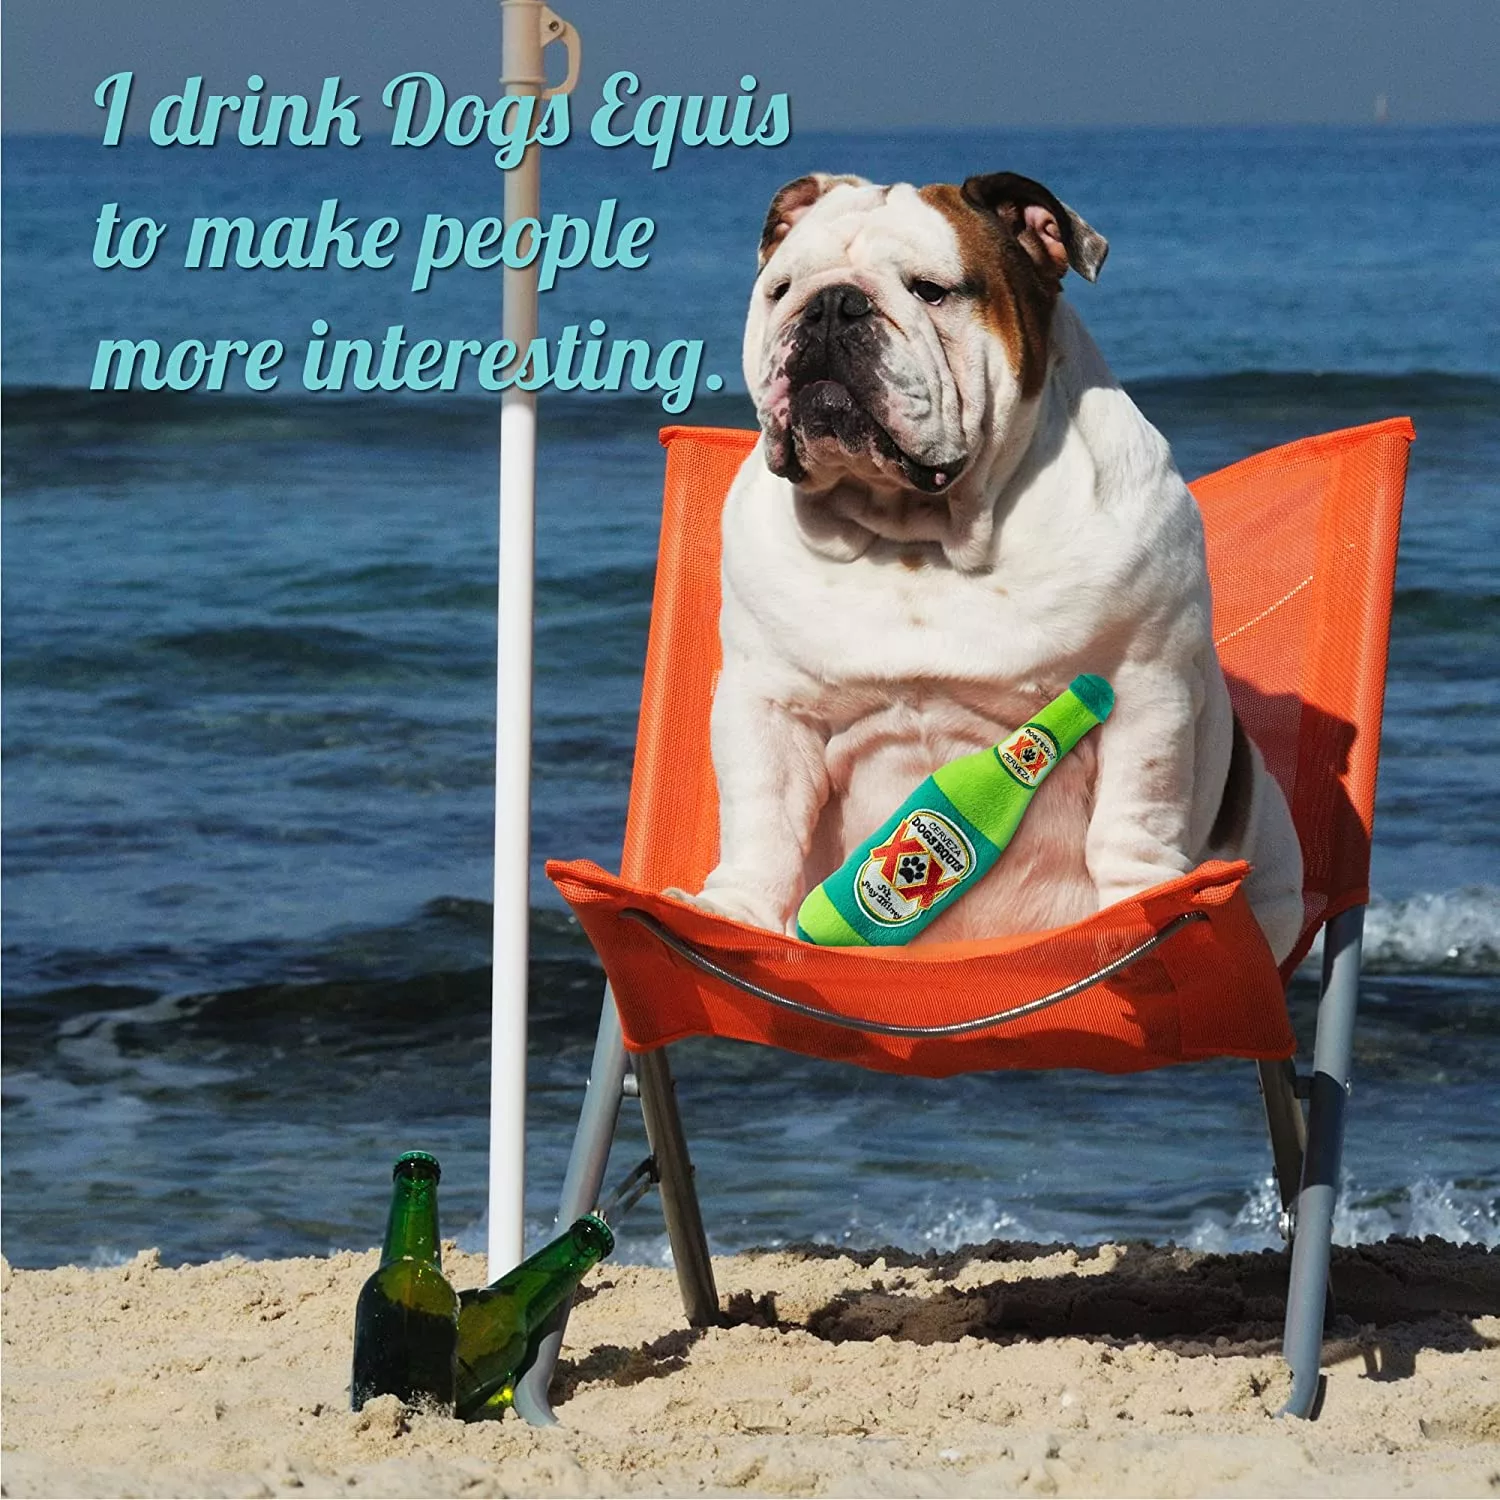 Bulldog on the beach with the Alcohol Brand Dog Toys